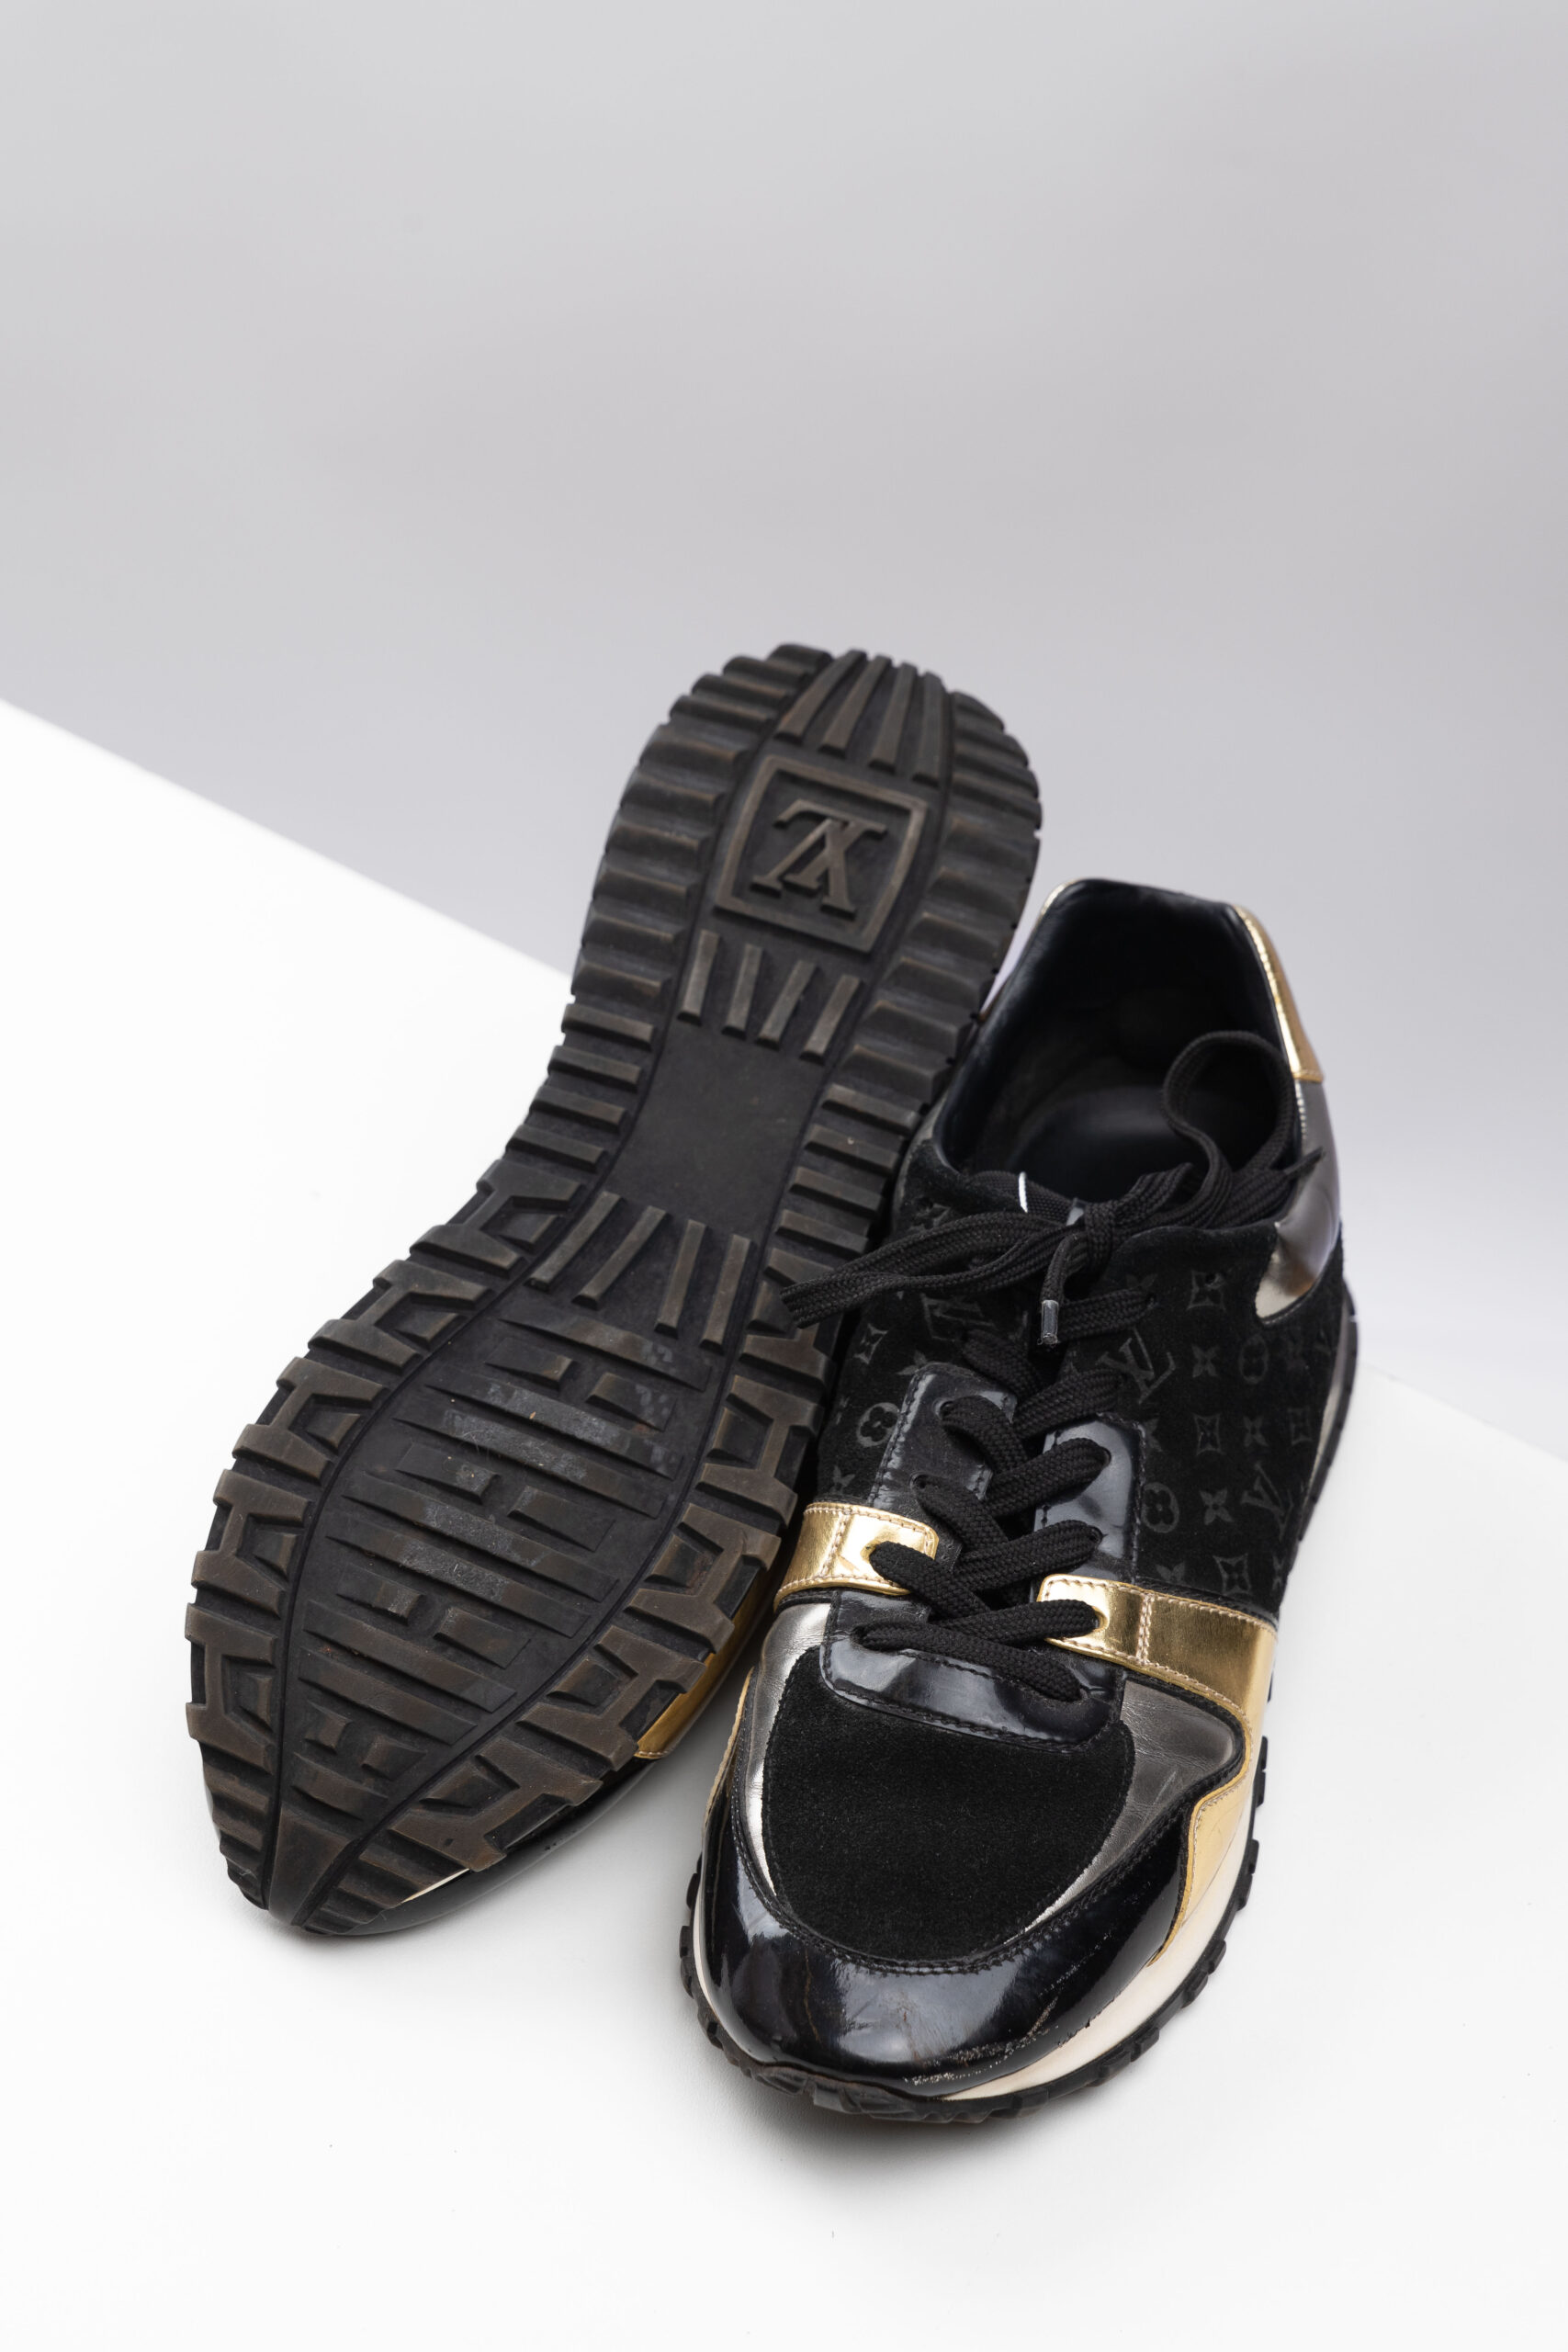 Tênis Louis Vuitton Monogram Sneakers Preto e Dourado 38 - Rehabita Brechó